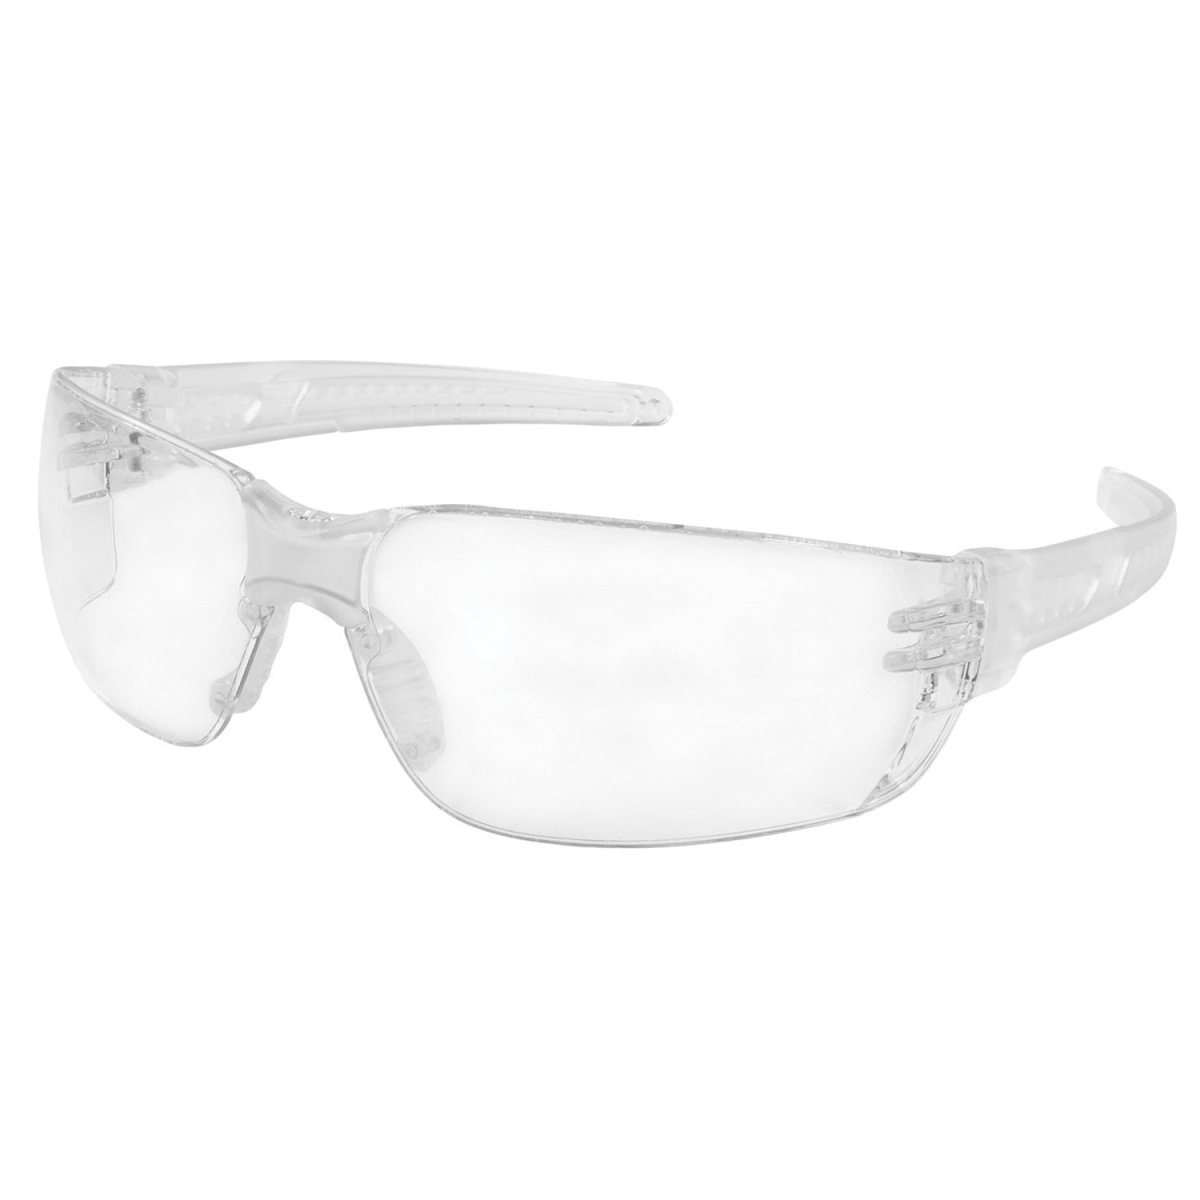 135-hk210pf Hellkat 2 Clear Safety Glasses Lens - Pack Of 12